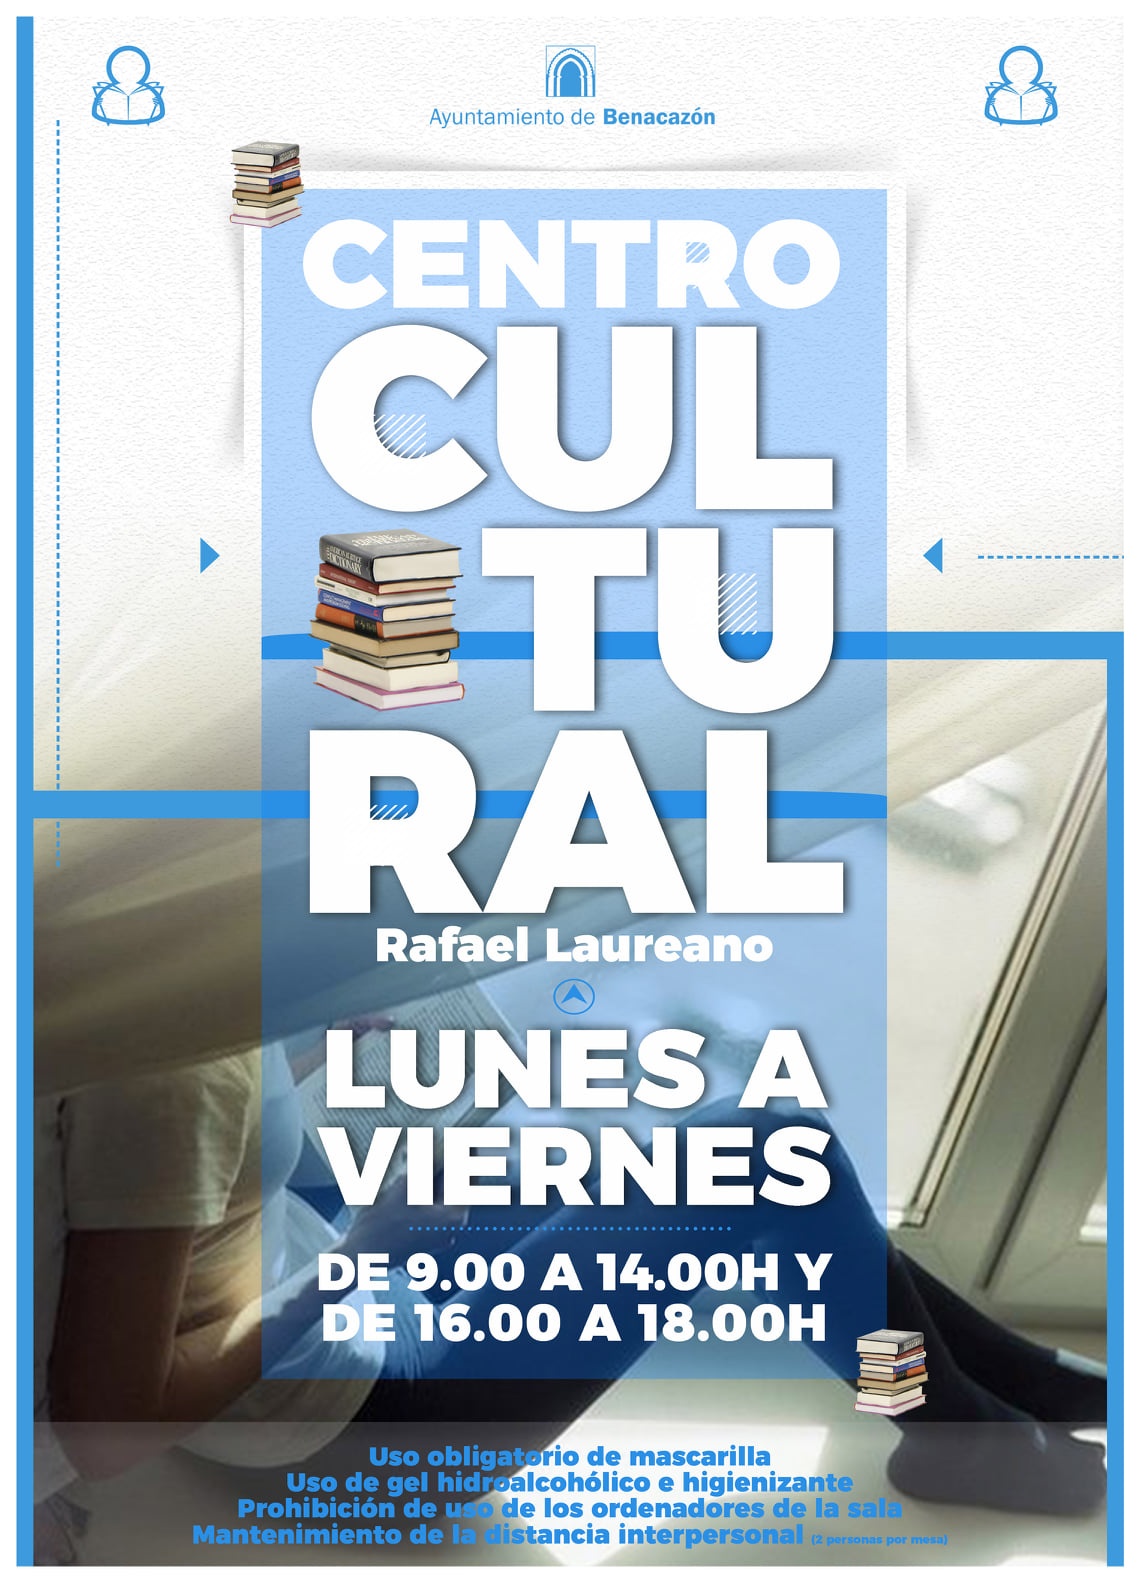 Cultura_Centro Cultural